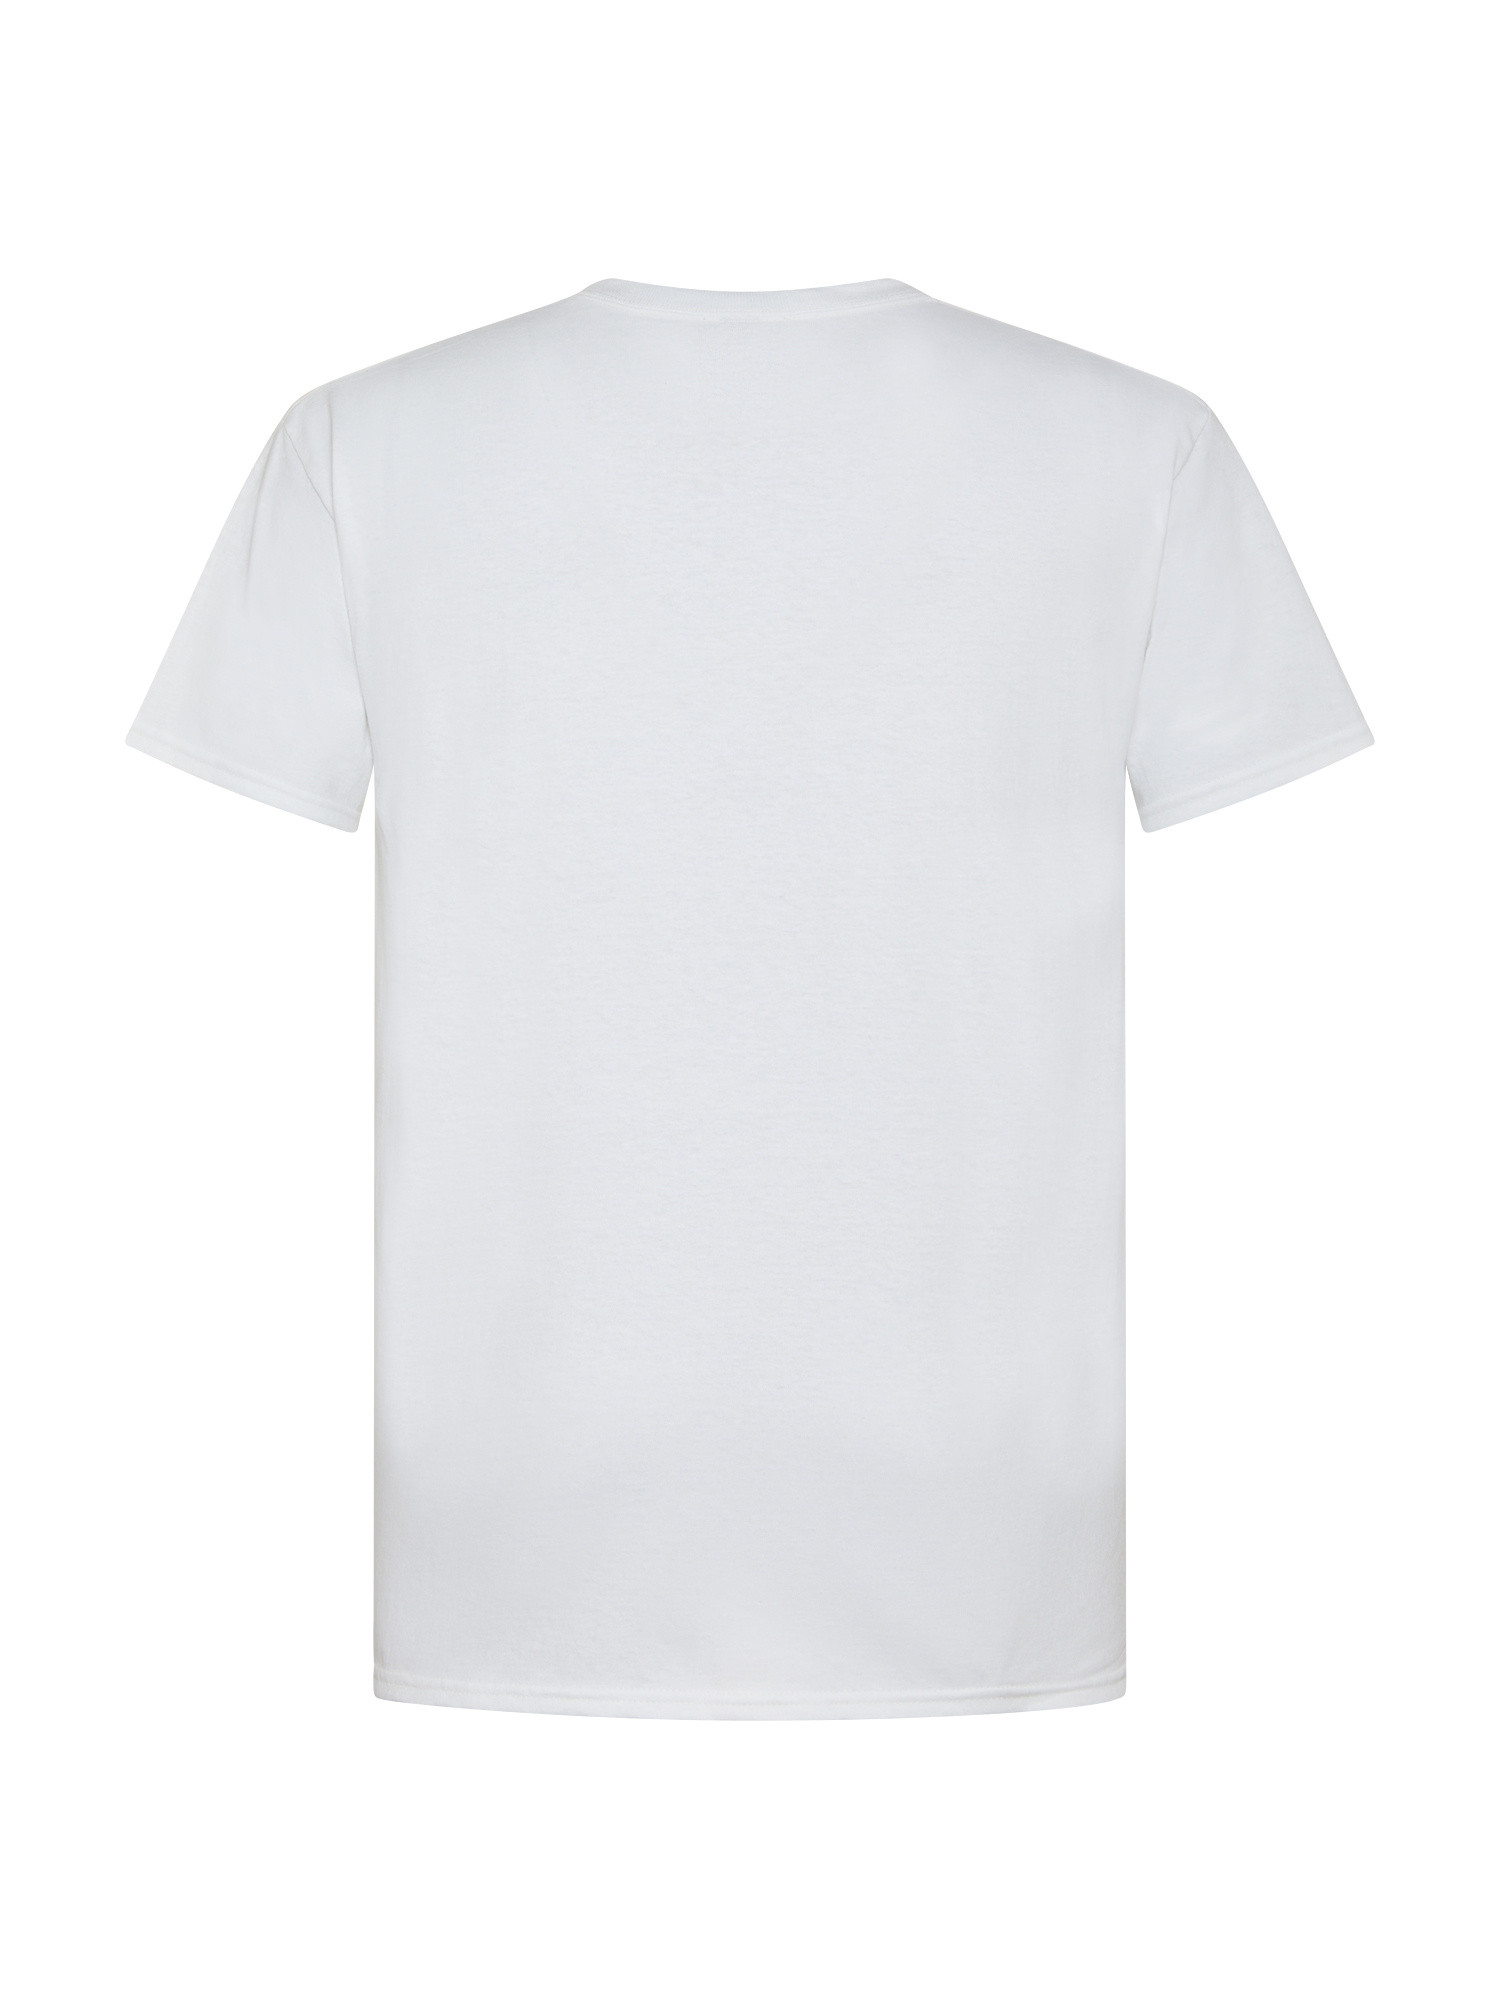 Thrasher - T-Shirt logo fiamme, Bianco, large image number 1